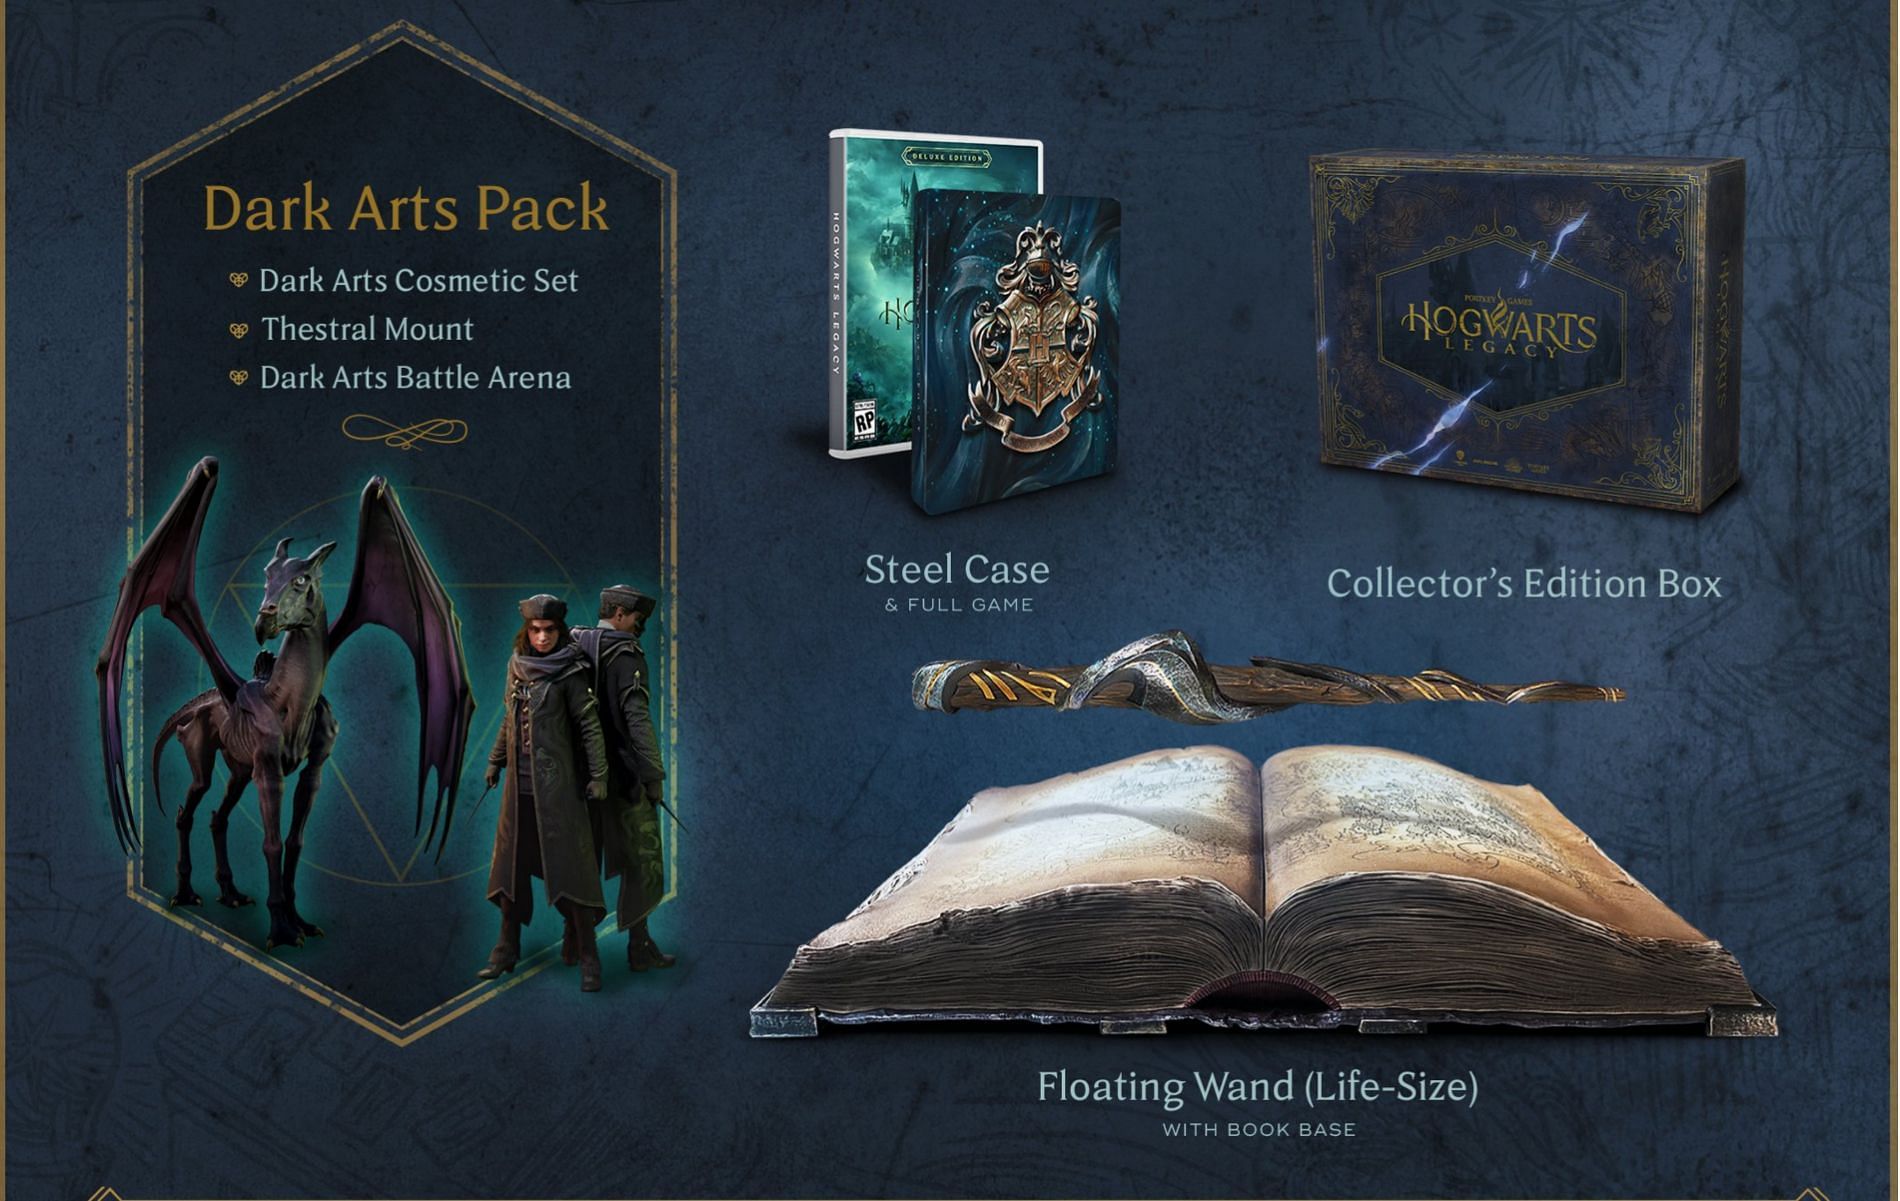 hogwarts legacy: dark arts pack